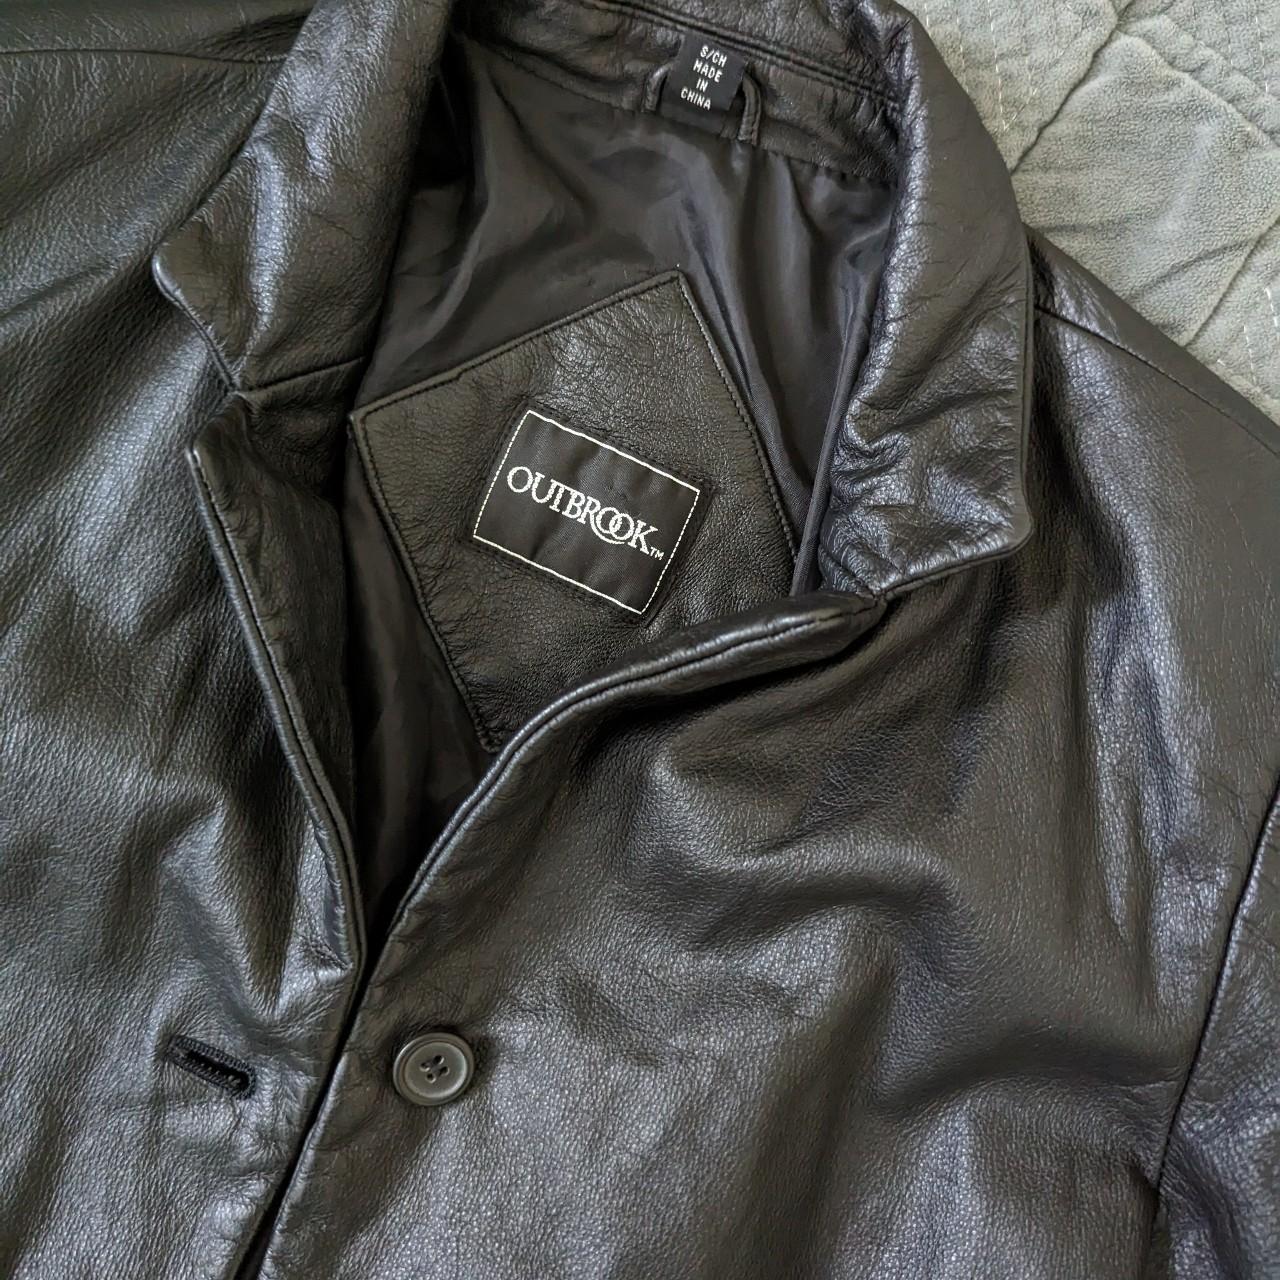 Outbrook Vintage Genuine Leather Jacket Cute blazer... - Depop